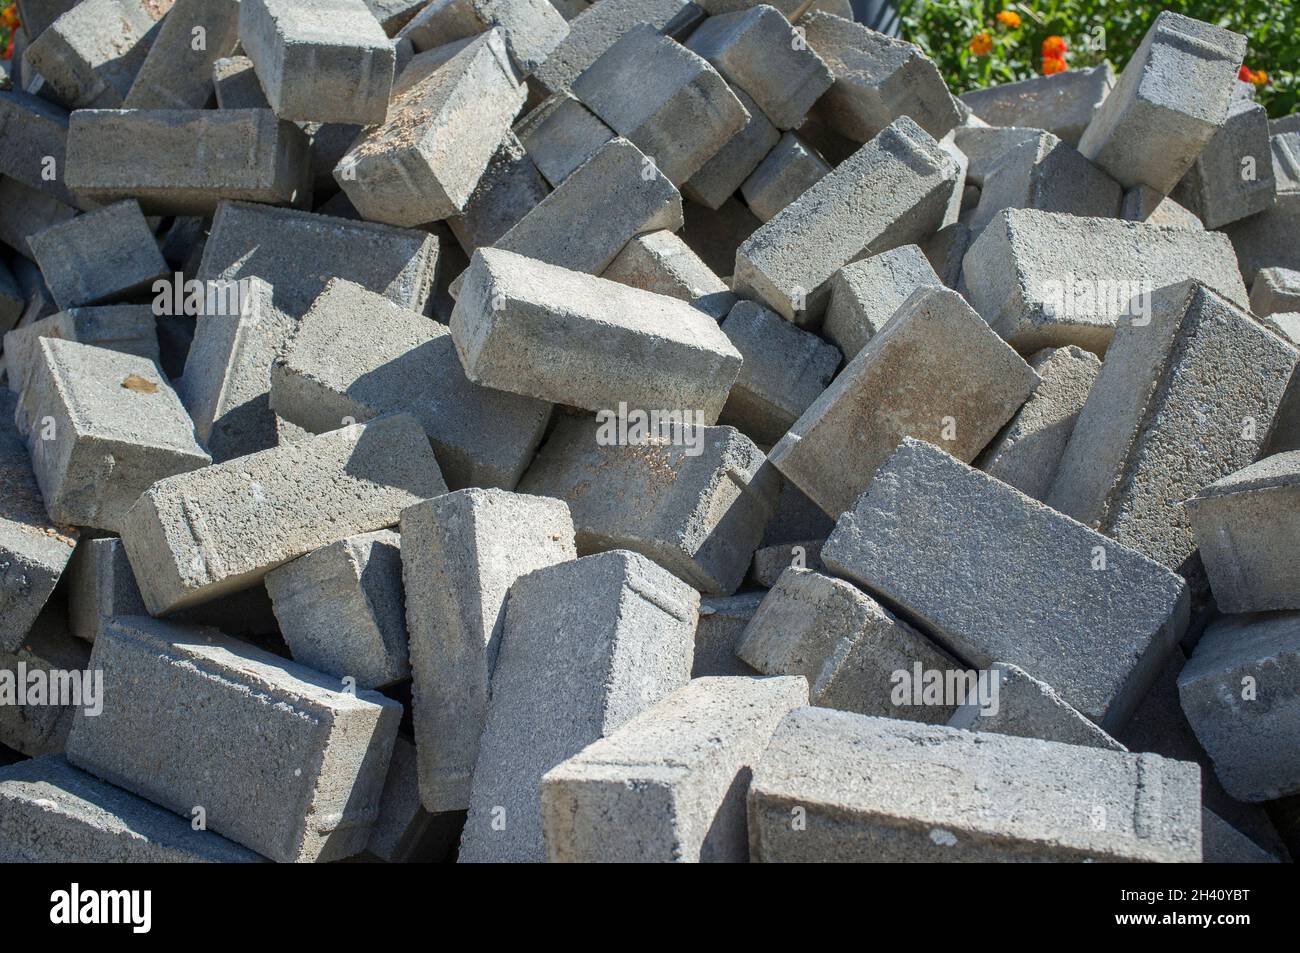 Pile of concrete cobblestones. Improvement of the city Infrastructure Stock Photo